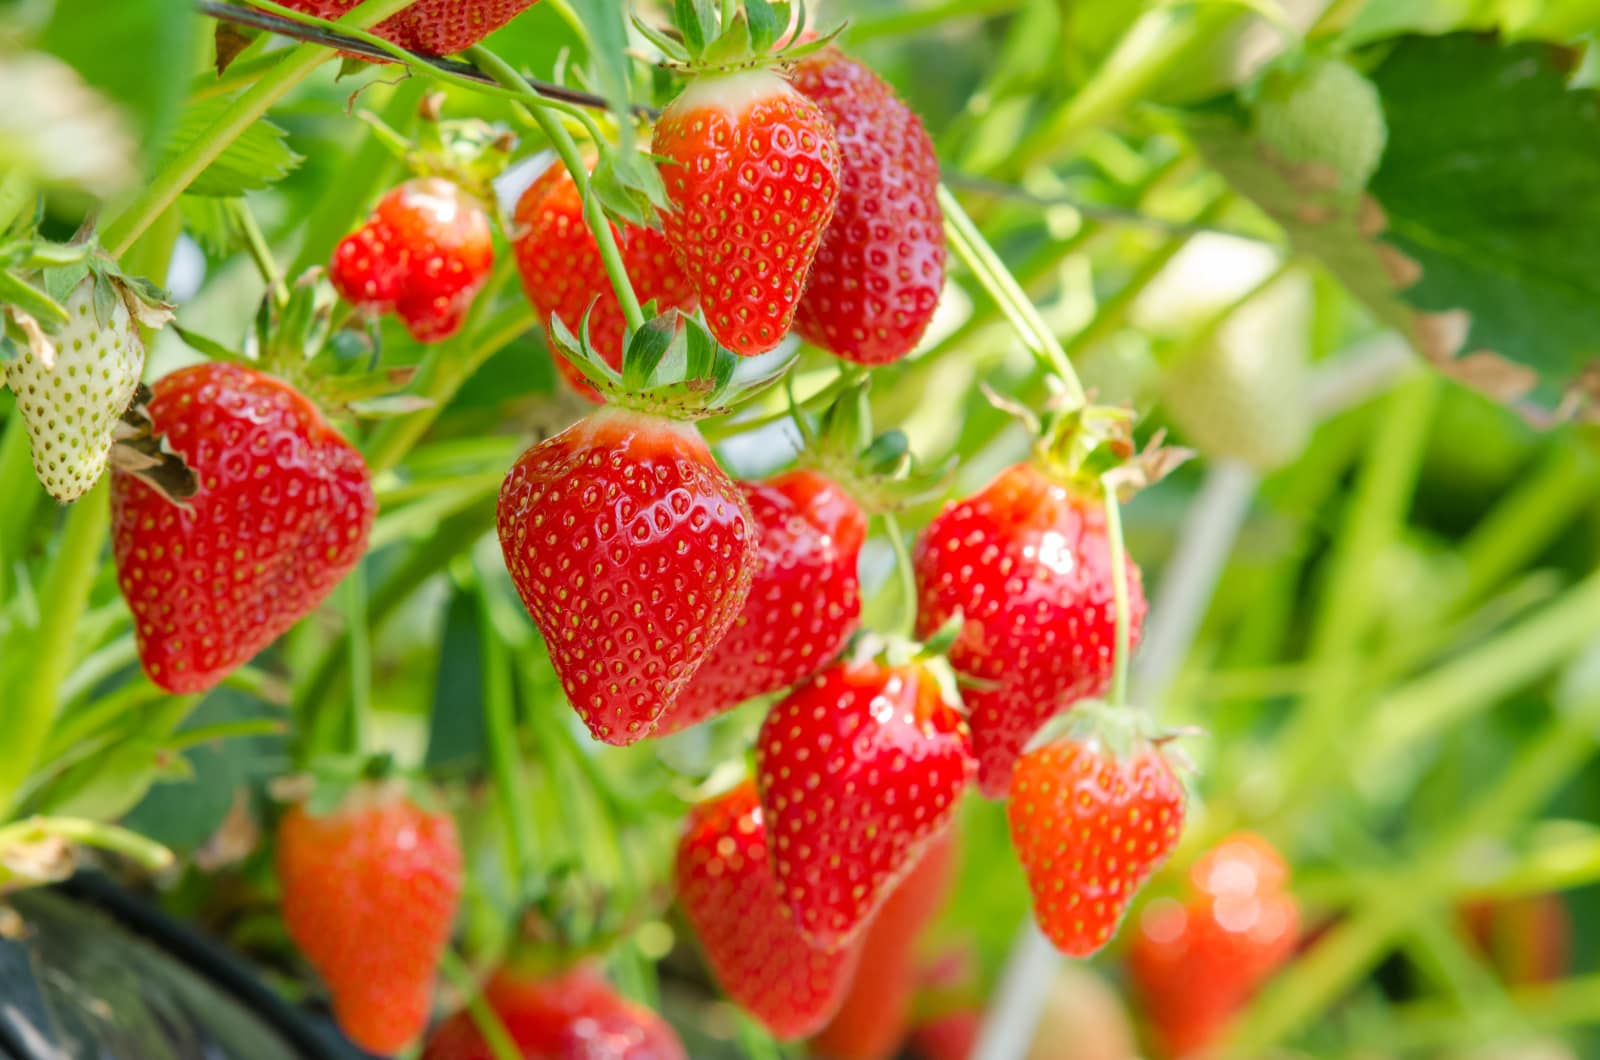 A coating of edible nanoparticles can drastically extend strawberry shelf life. Photo by Taras Garkusha via Shutterstock.com